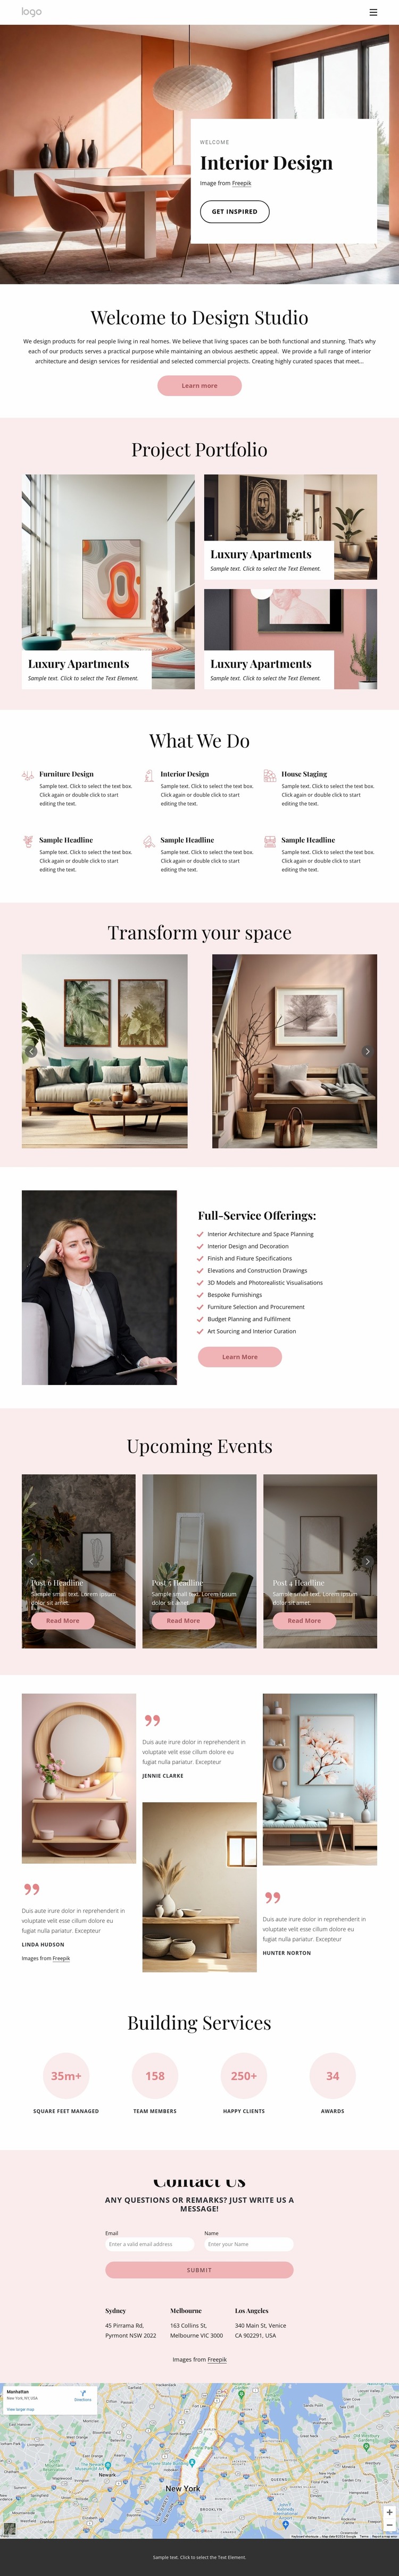 The interior design firm Website Mockup